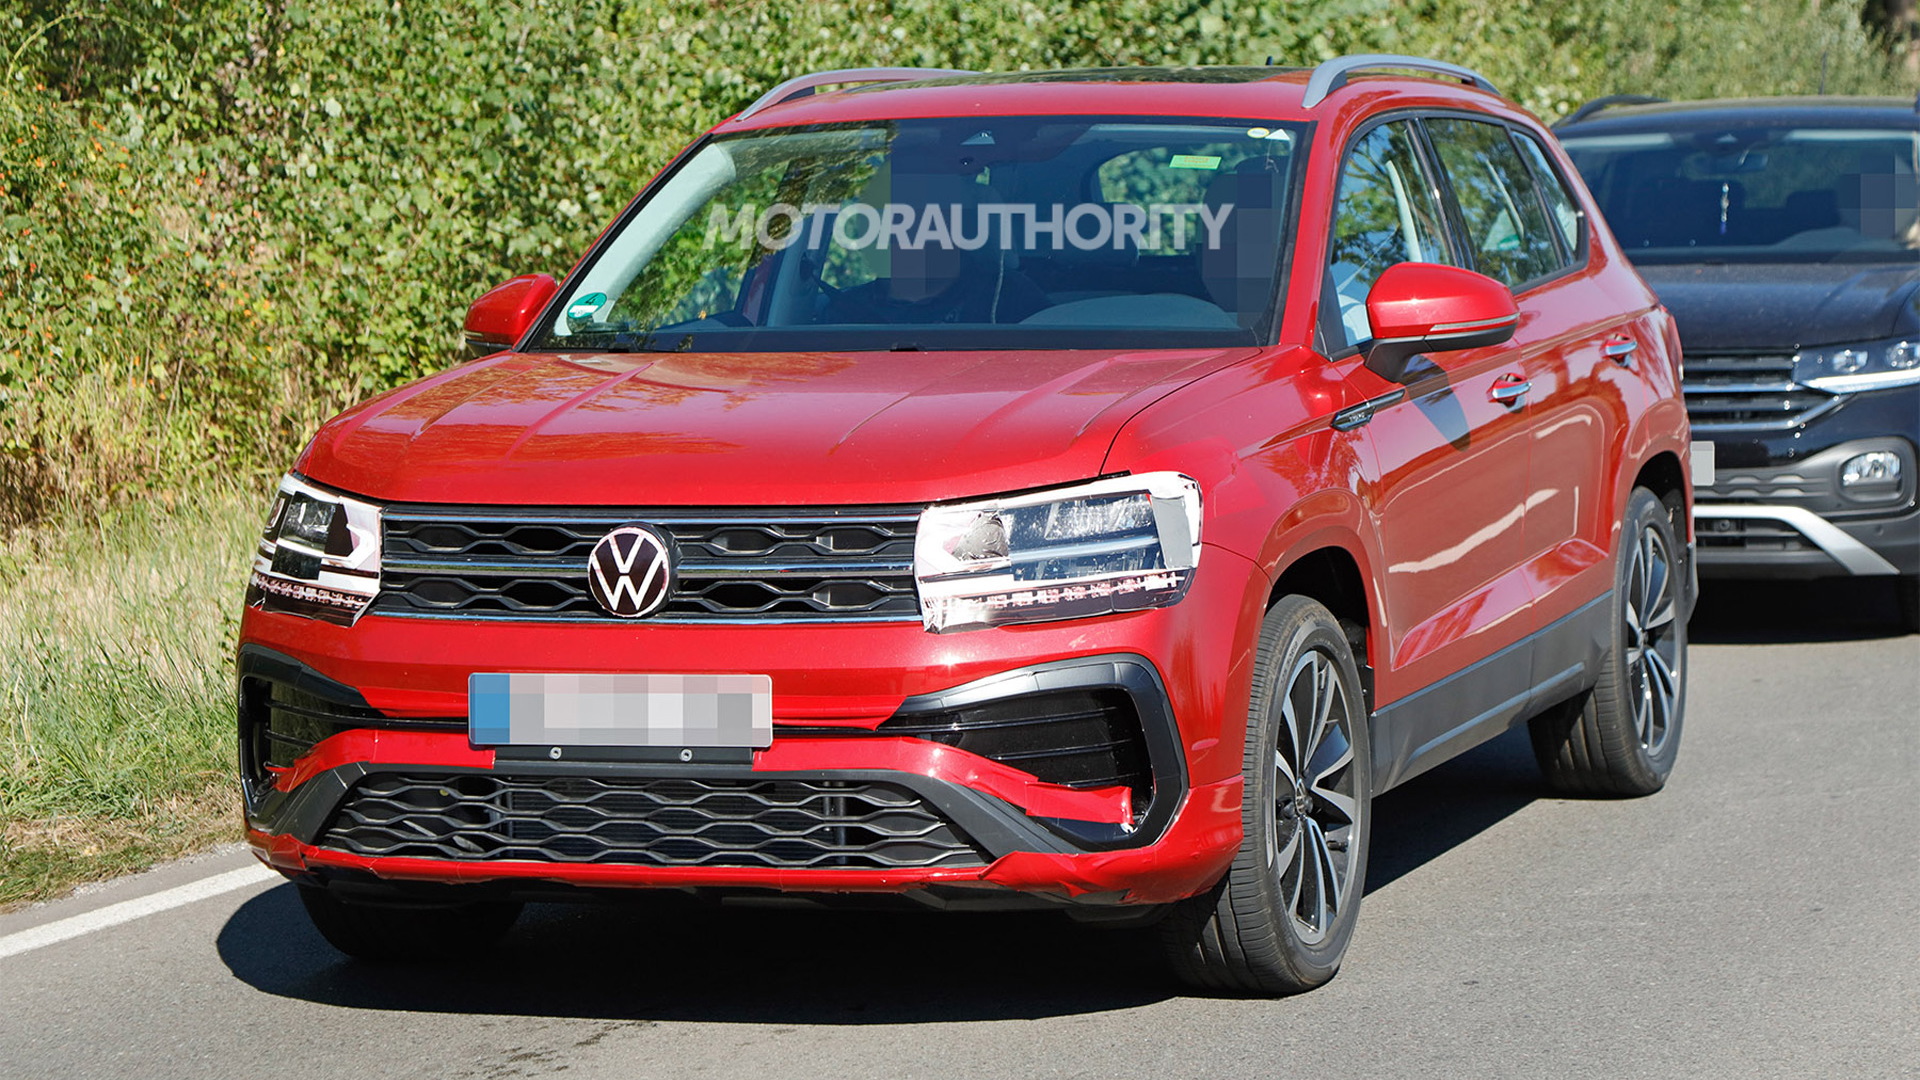 2024 Volkswagen Tharu (Taos) facelift spy shots - Photo credit: S. Baldauf/SB-Medien